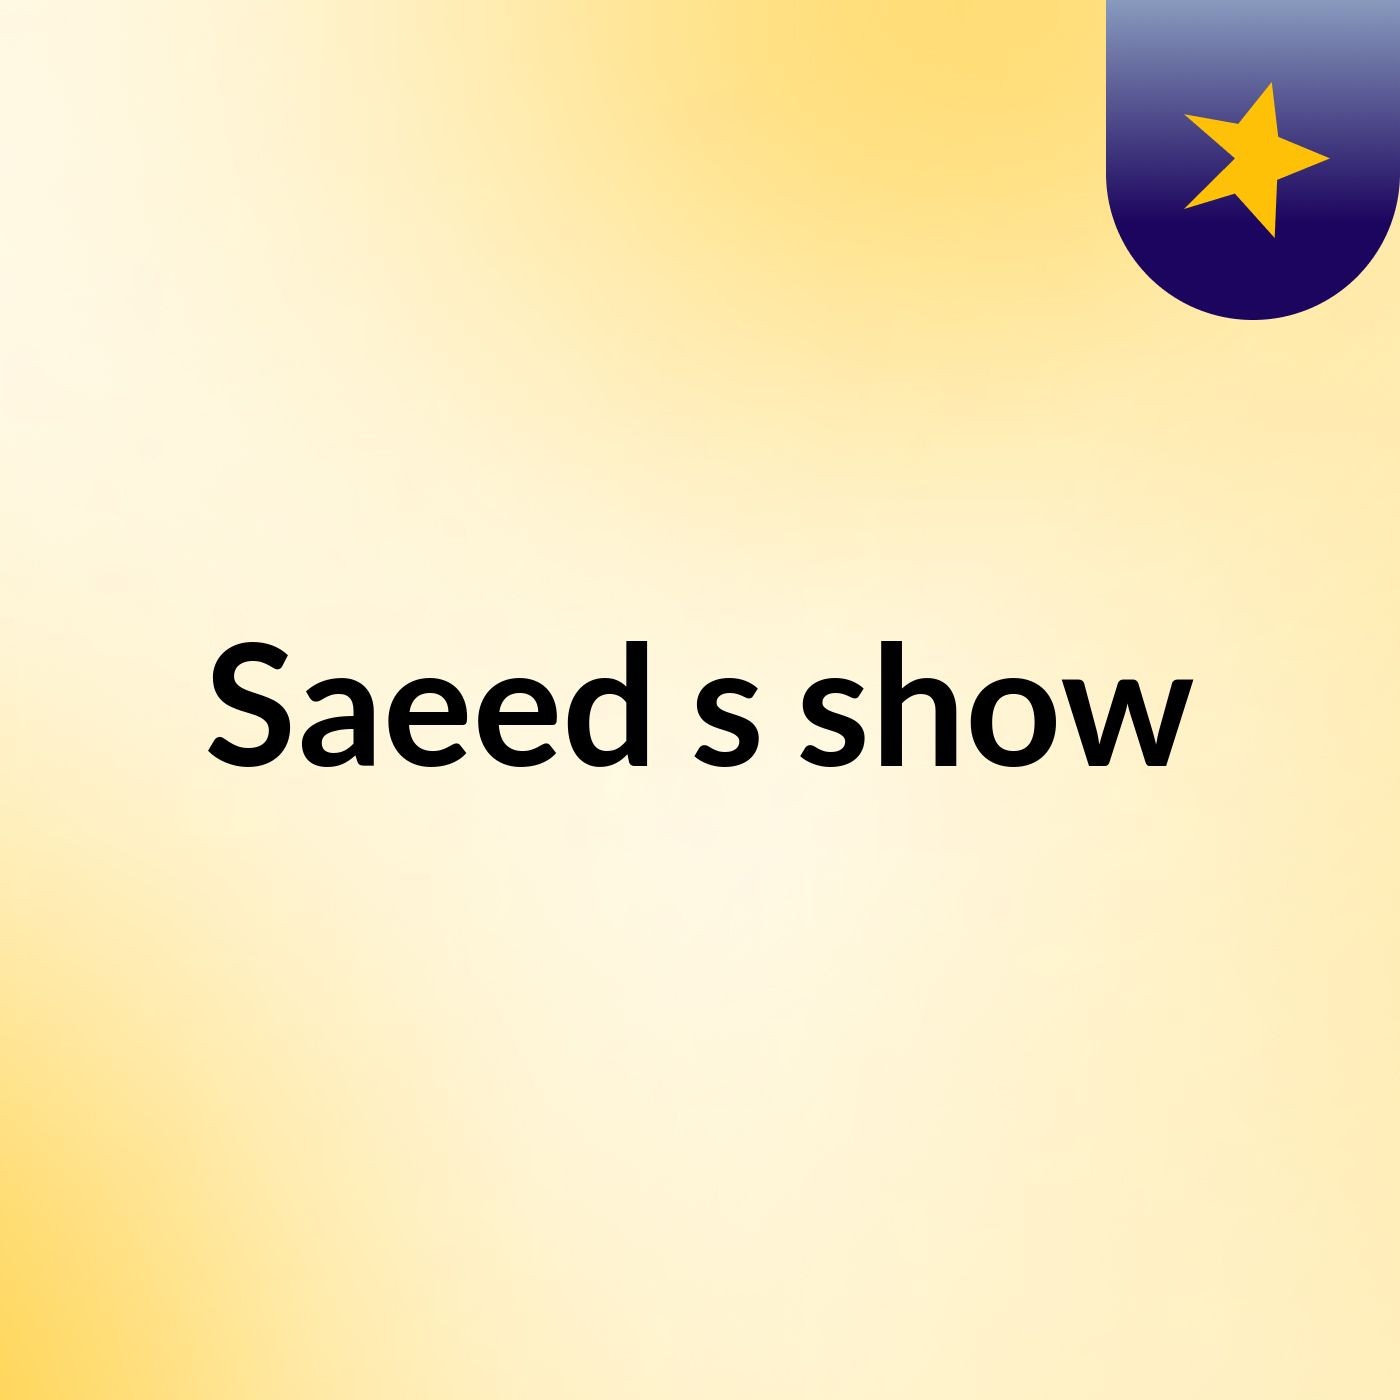 Saeed's show